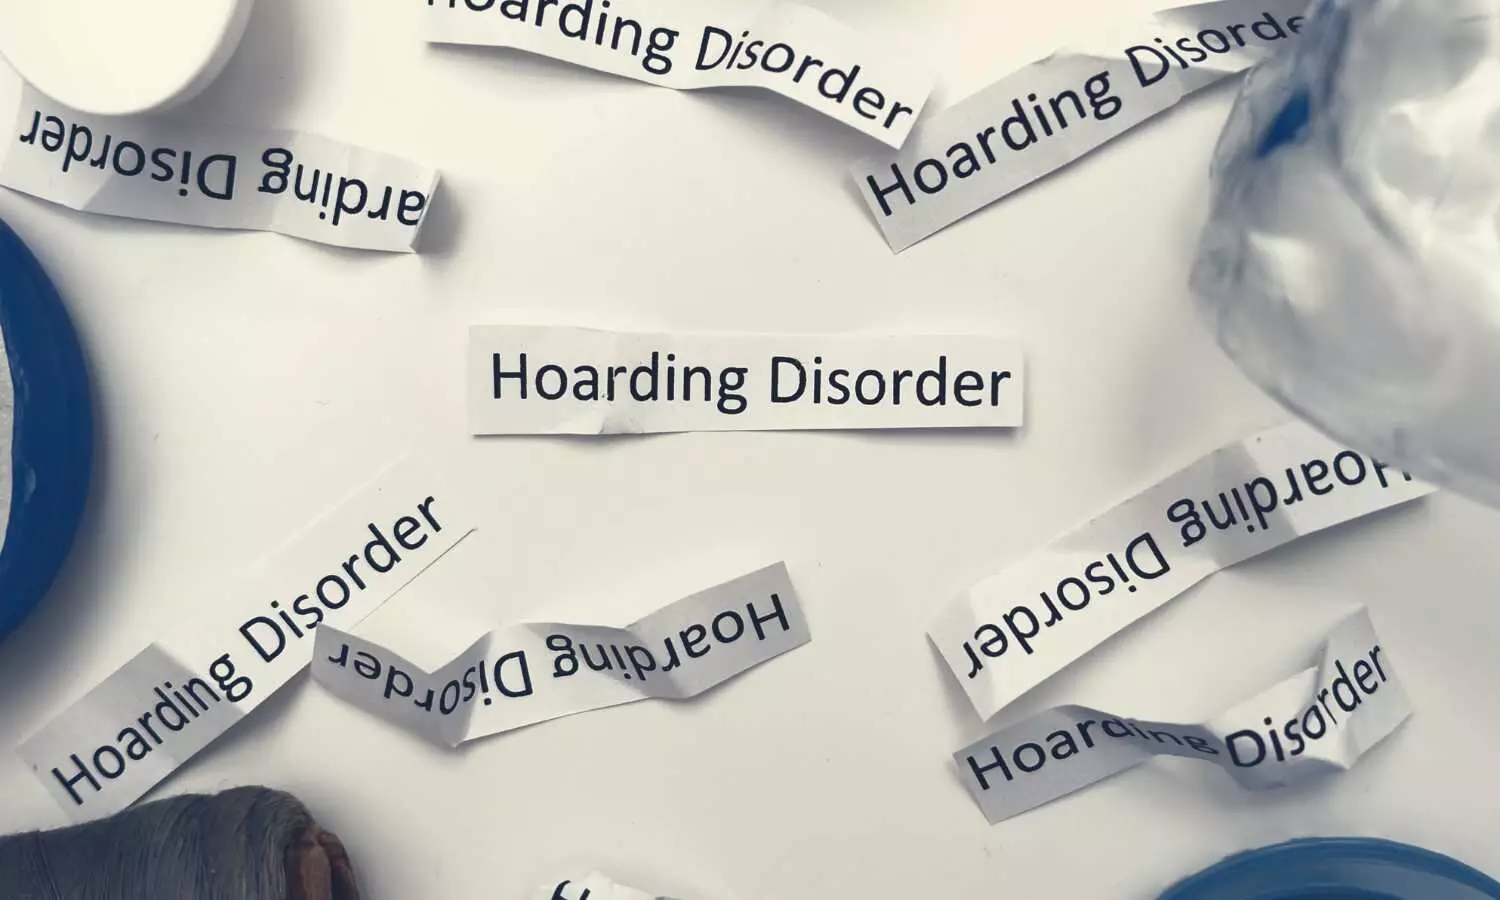 New guidance on hoarding disorder: Key takes